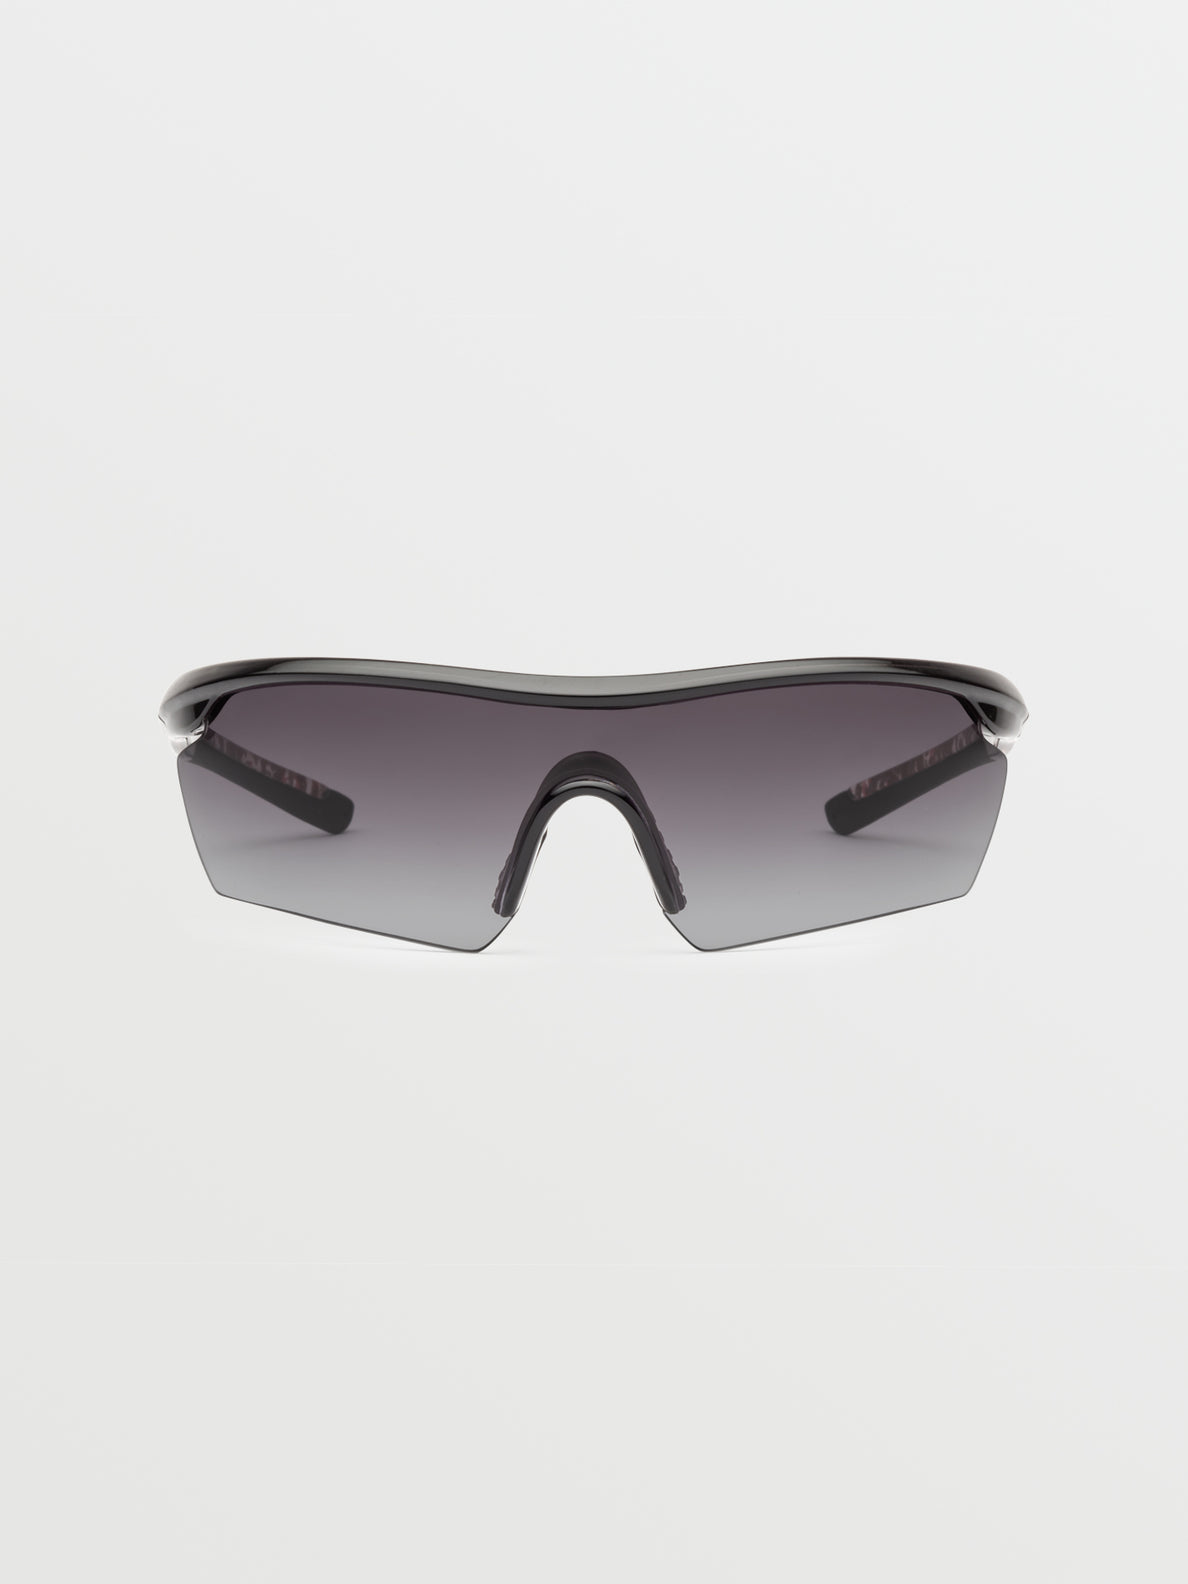 Download Sunglasses - Tie Dye / Gray Gradient